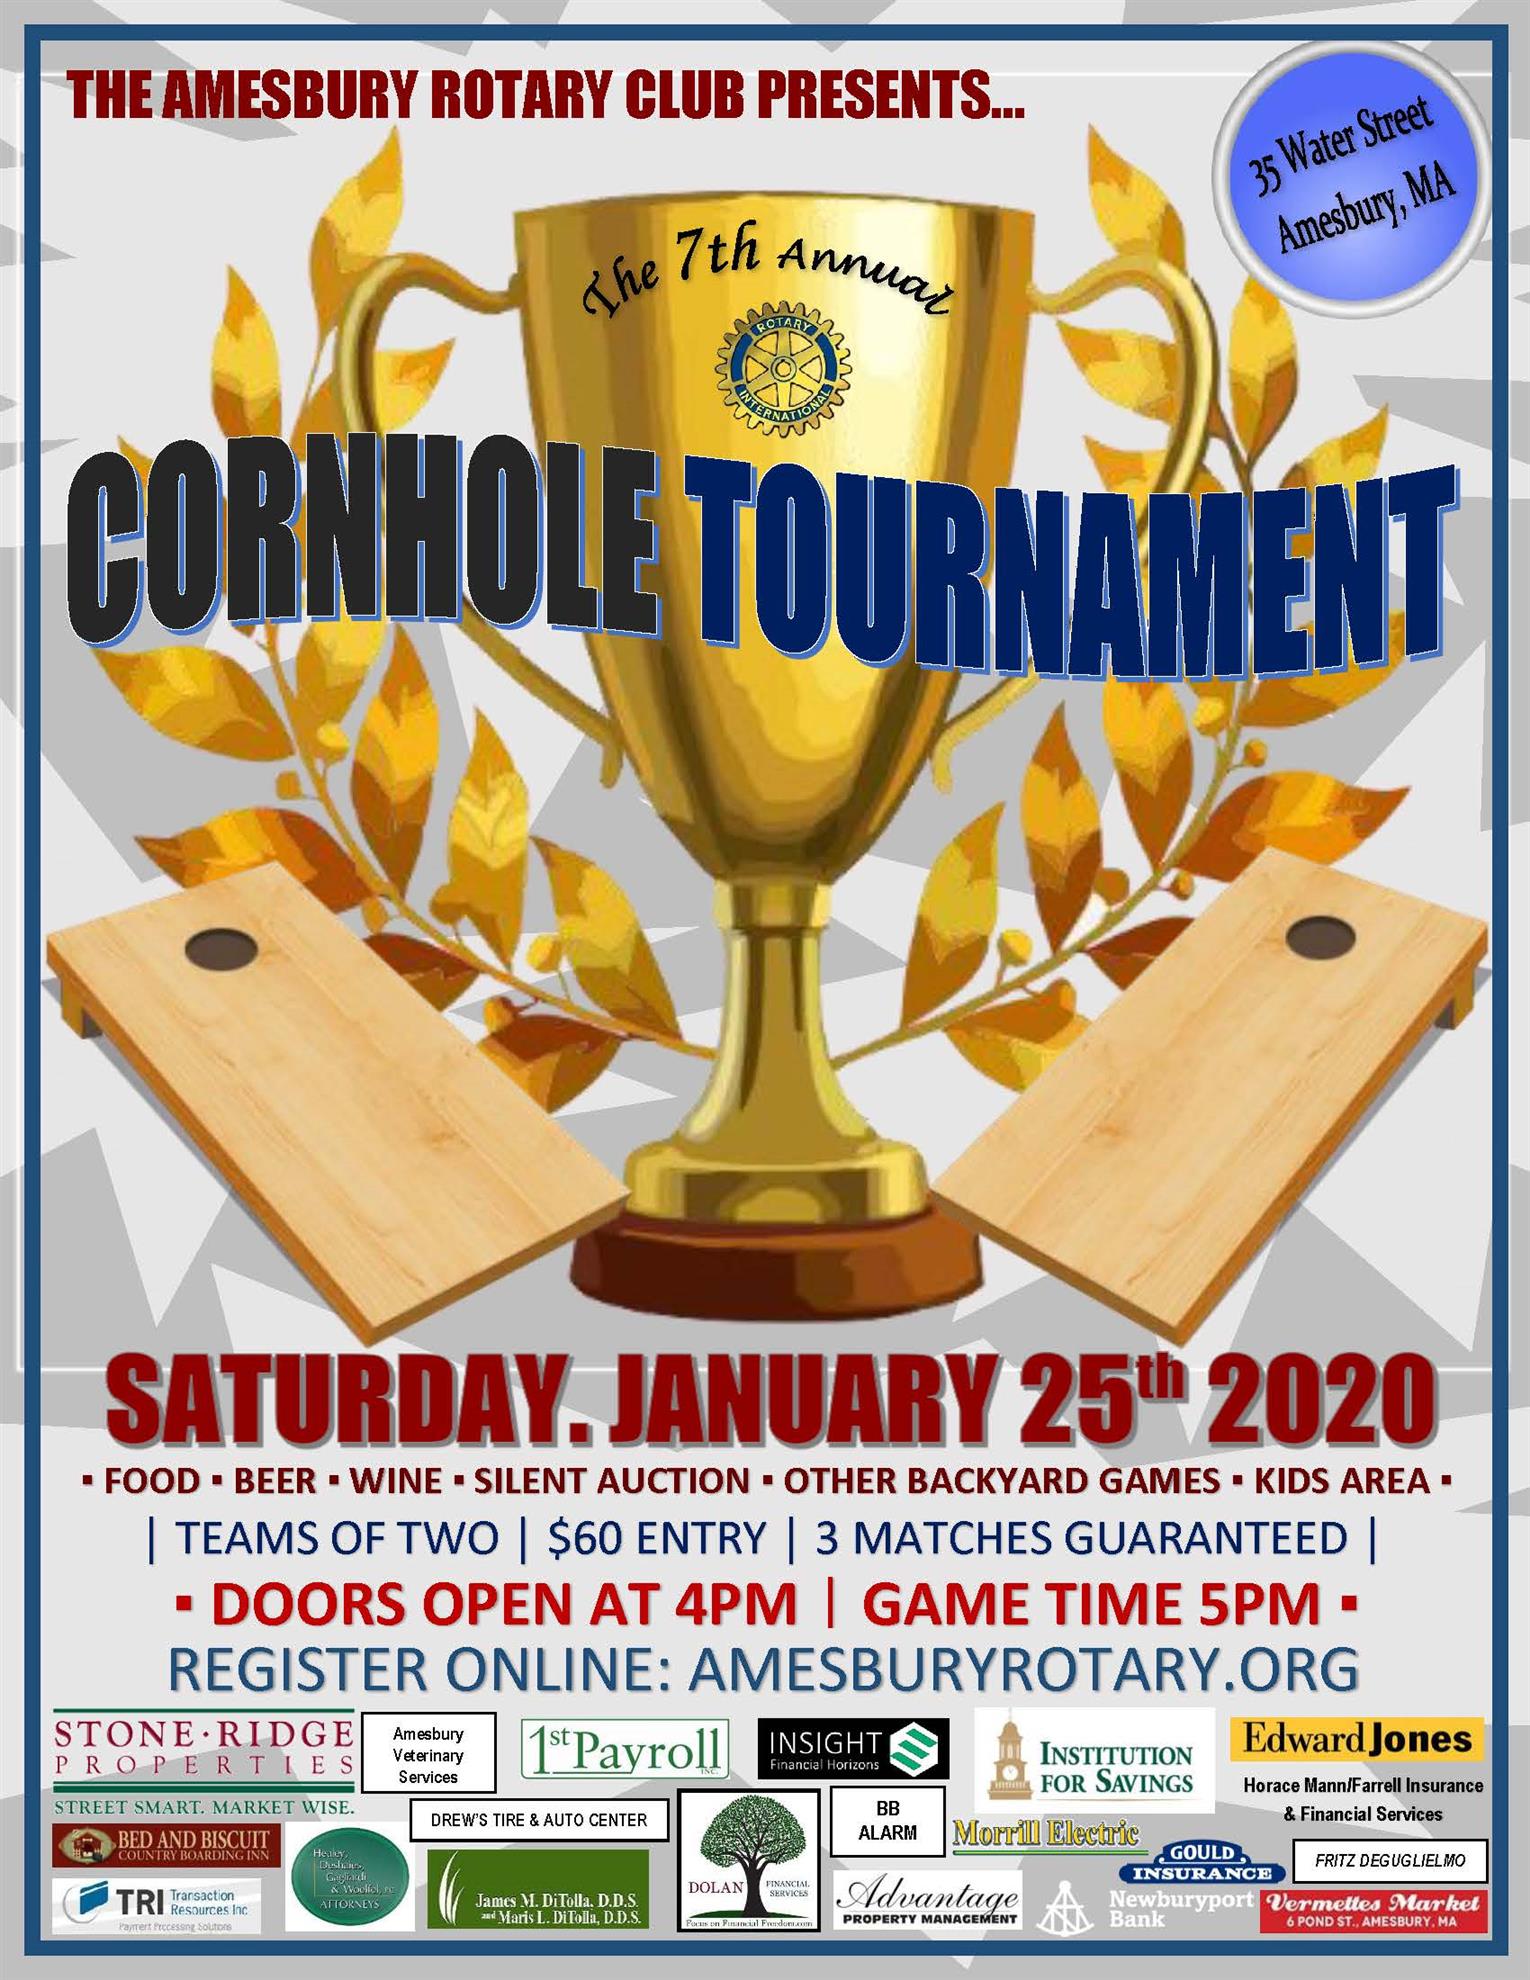 Bagapalooza Cornhole Tournament to raise funds for Rotary